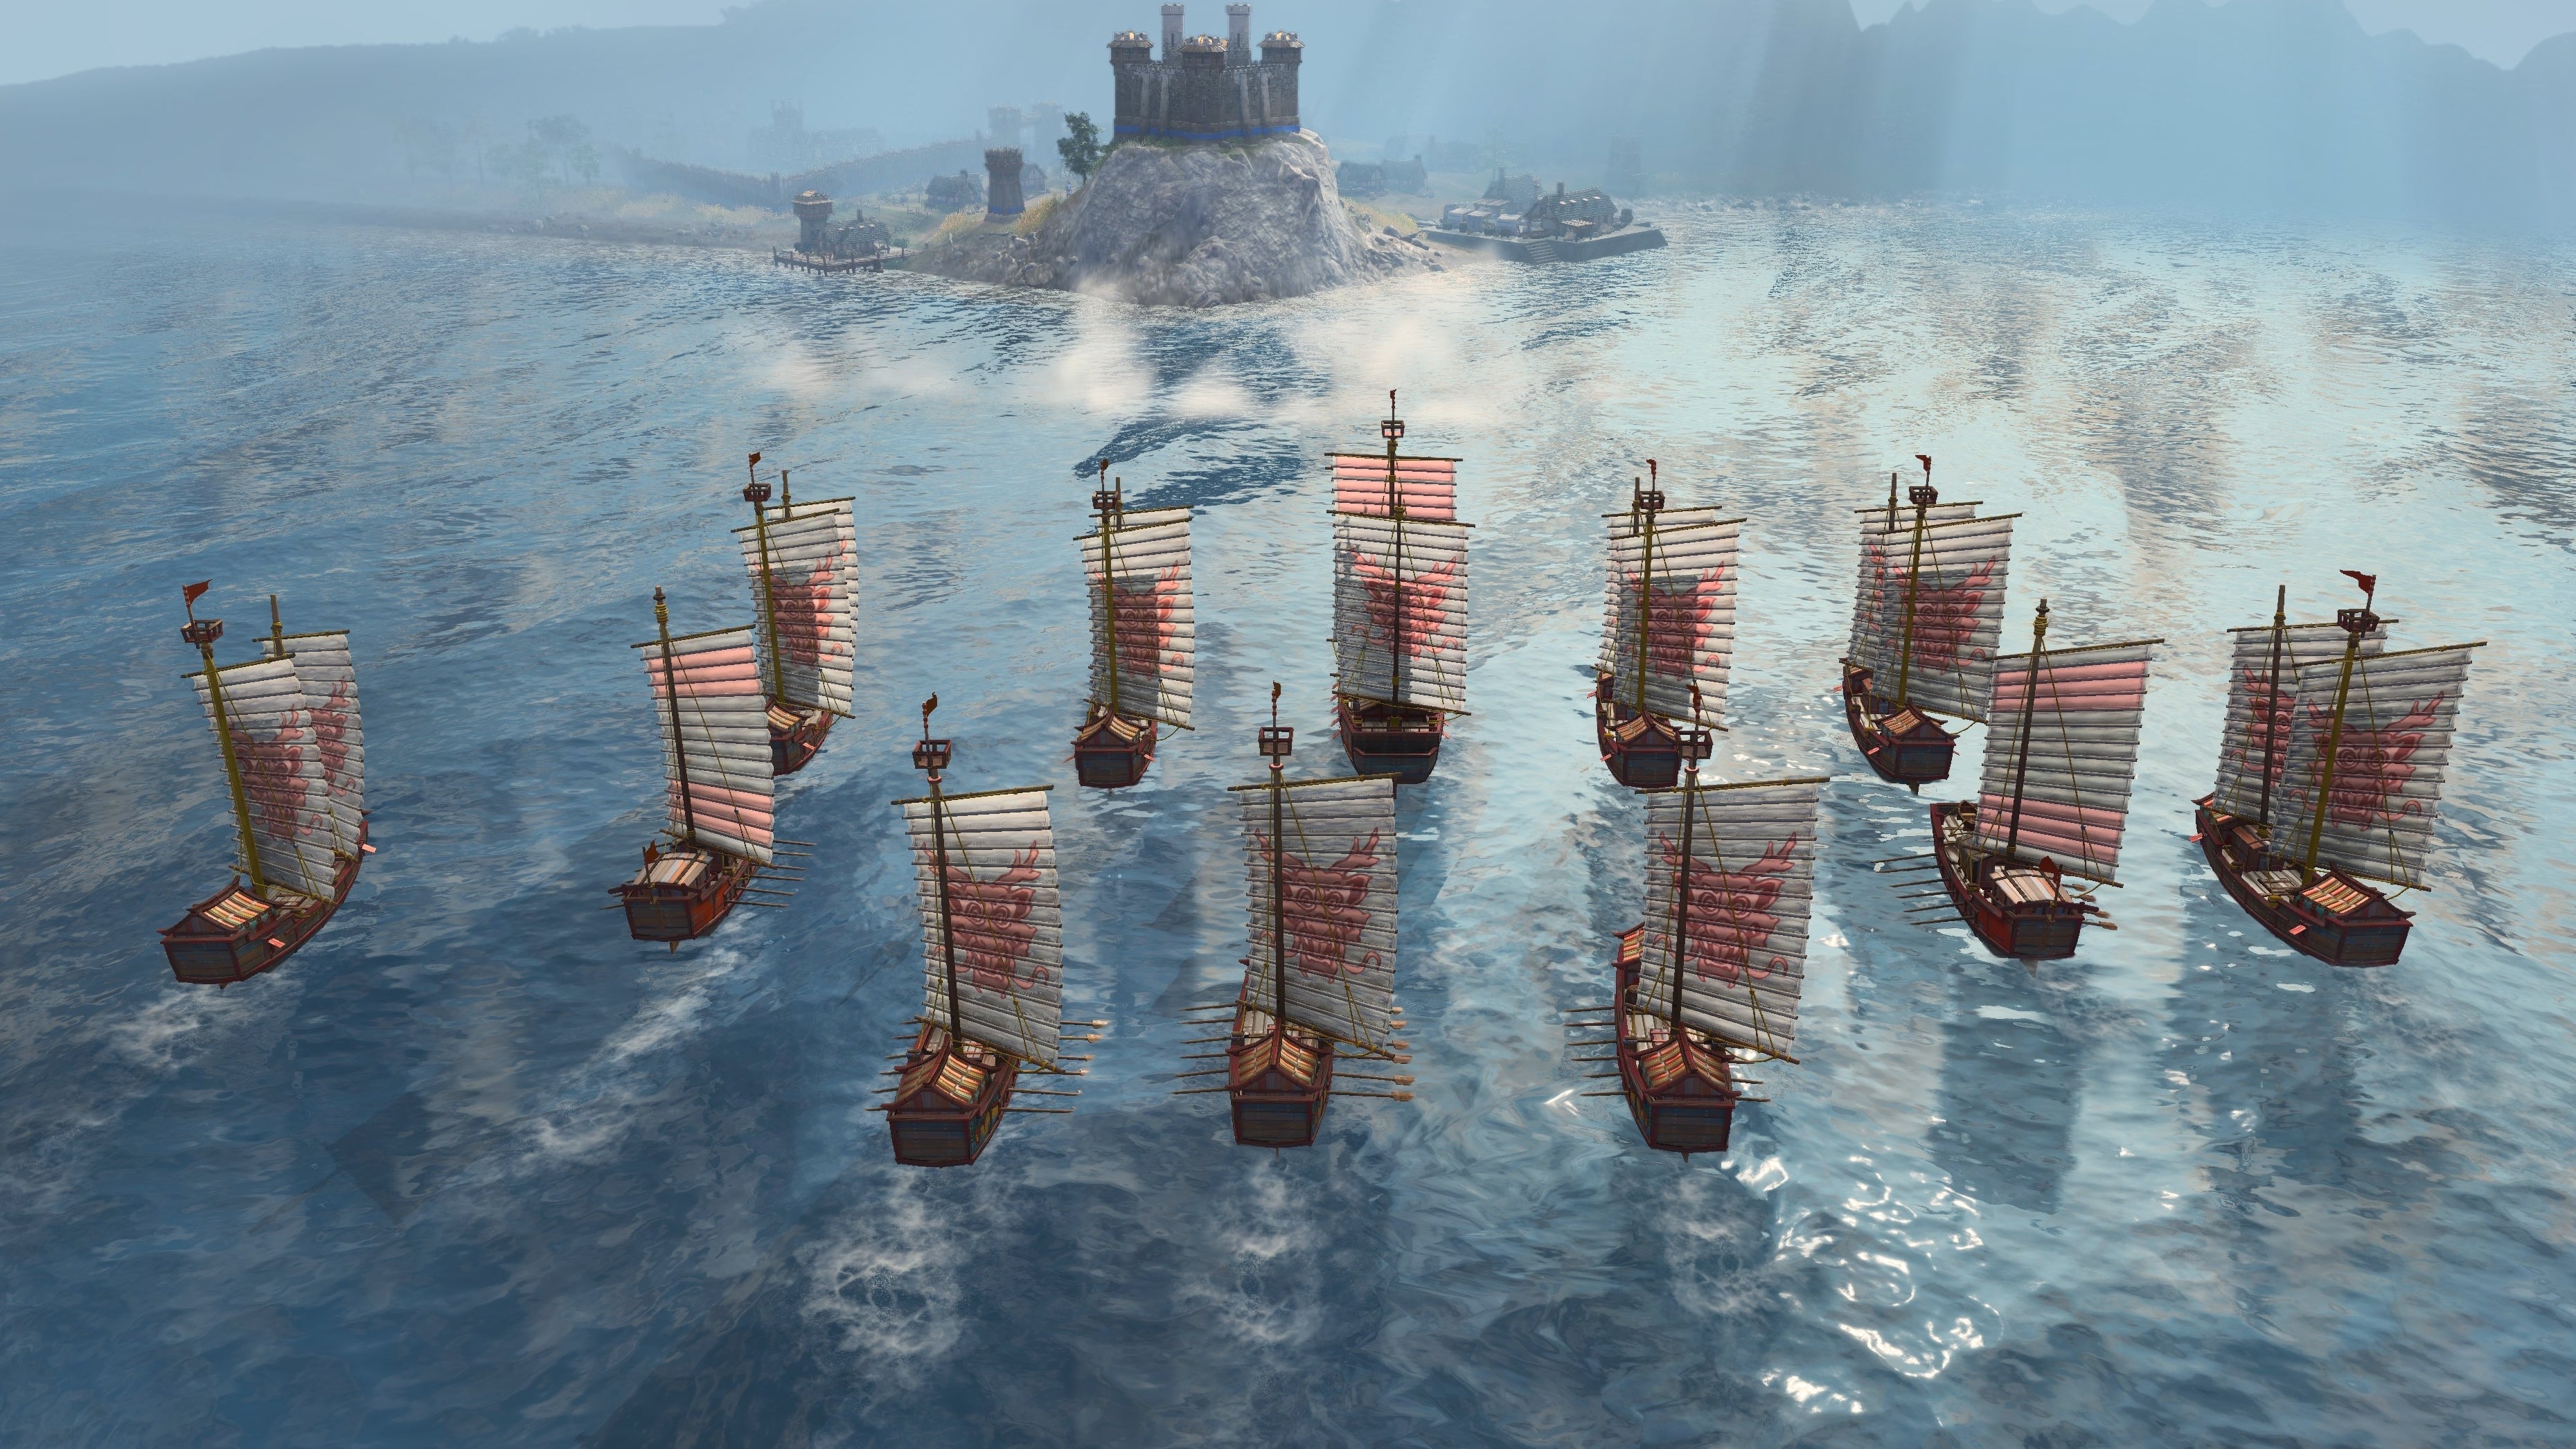 Immagine di Age of Empires 4 arriva in autunno! Gameplay tra elefanti da guerra, impero cinese e battaglie navali